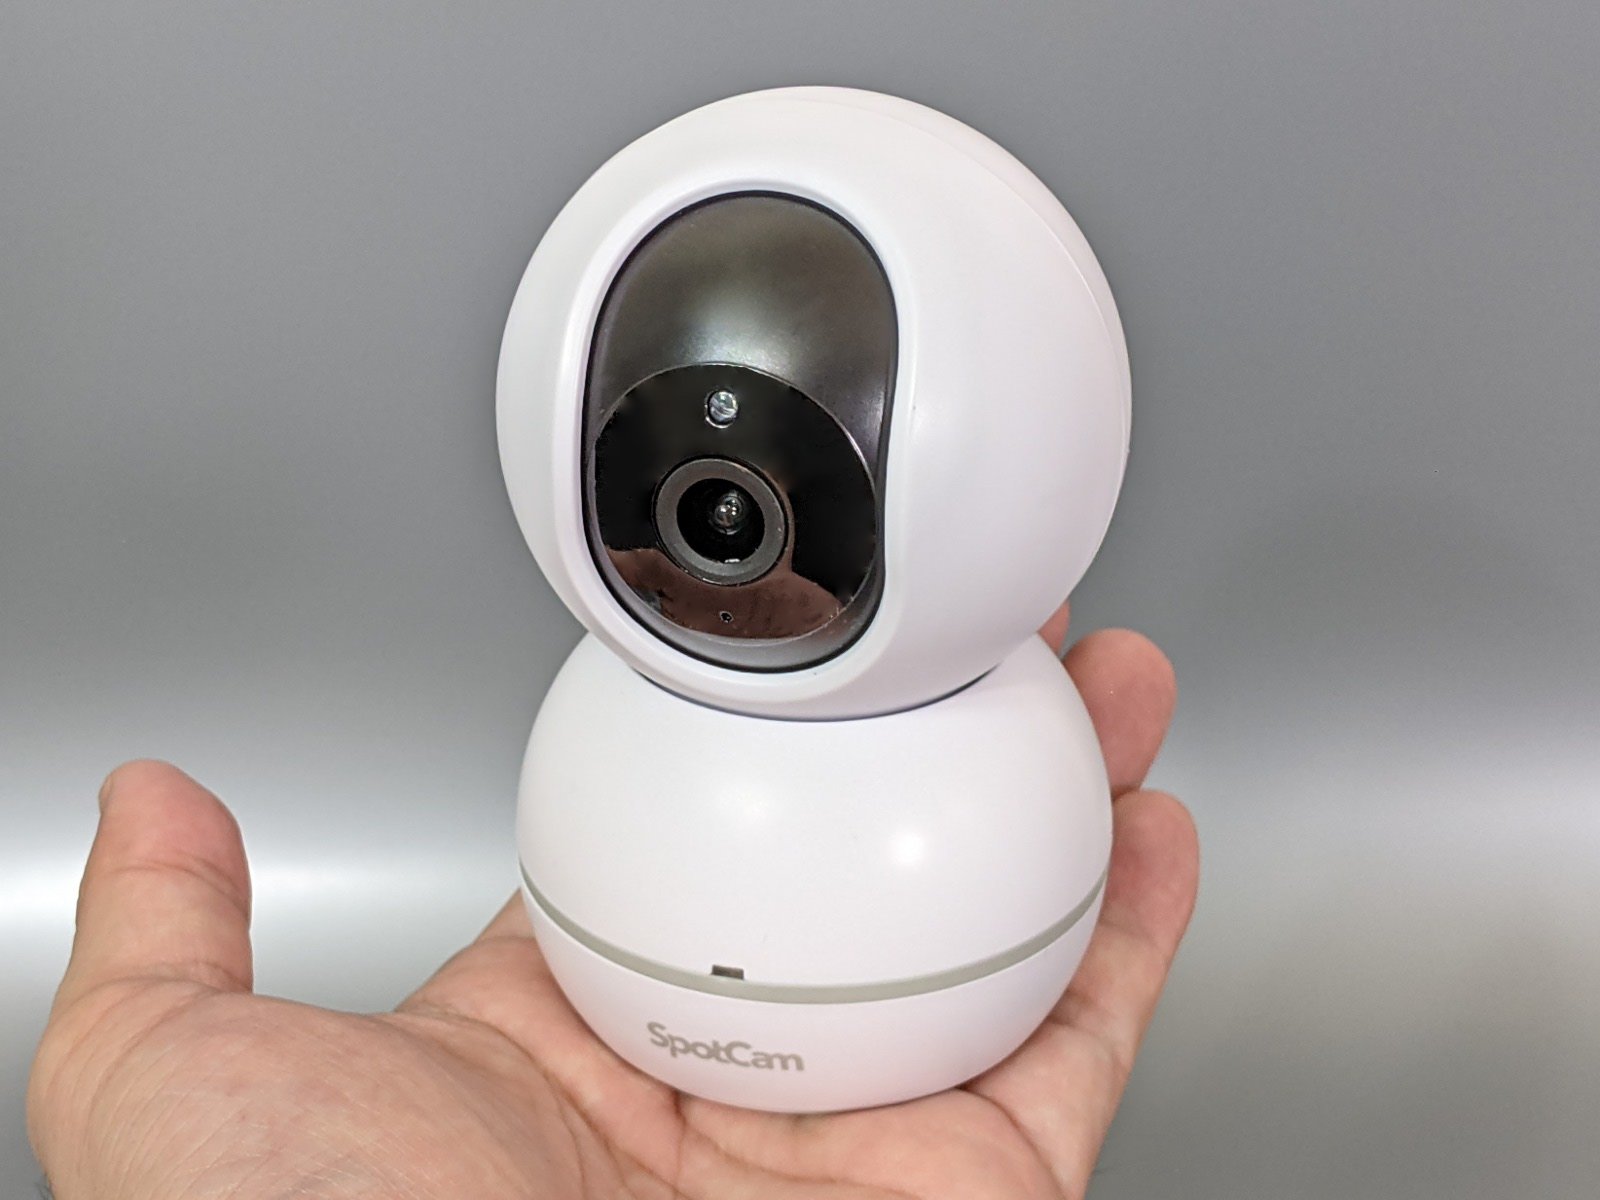 SpotCam SpotCam Eva 2 [ ネットワークカメラ ] モニタリングカメラ Wi